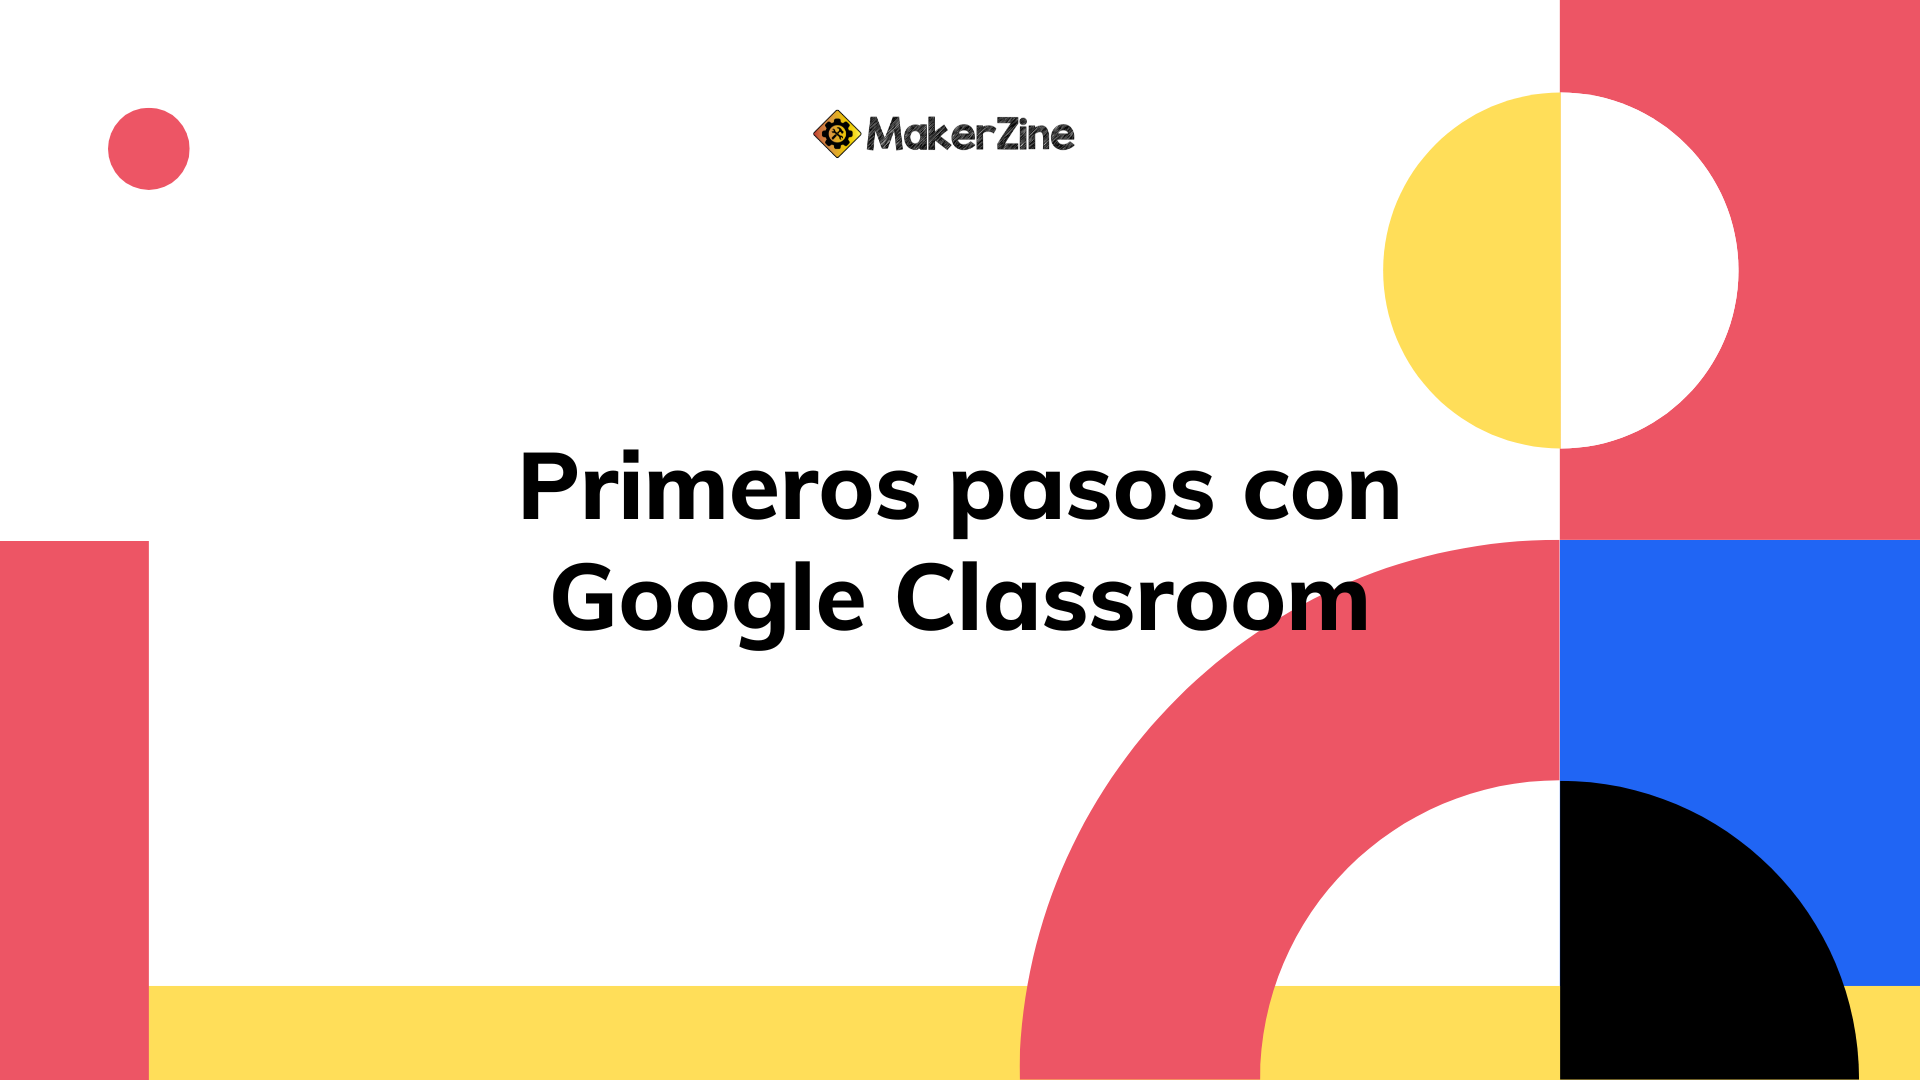 En este momento estás viendo Primeros pasos con Google Classroom